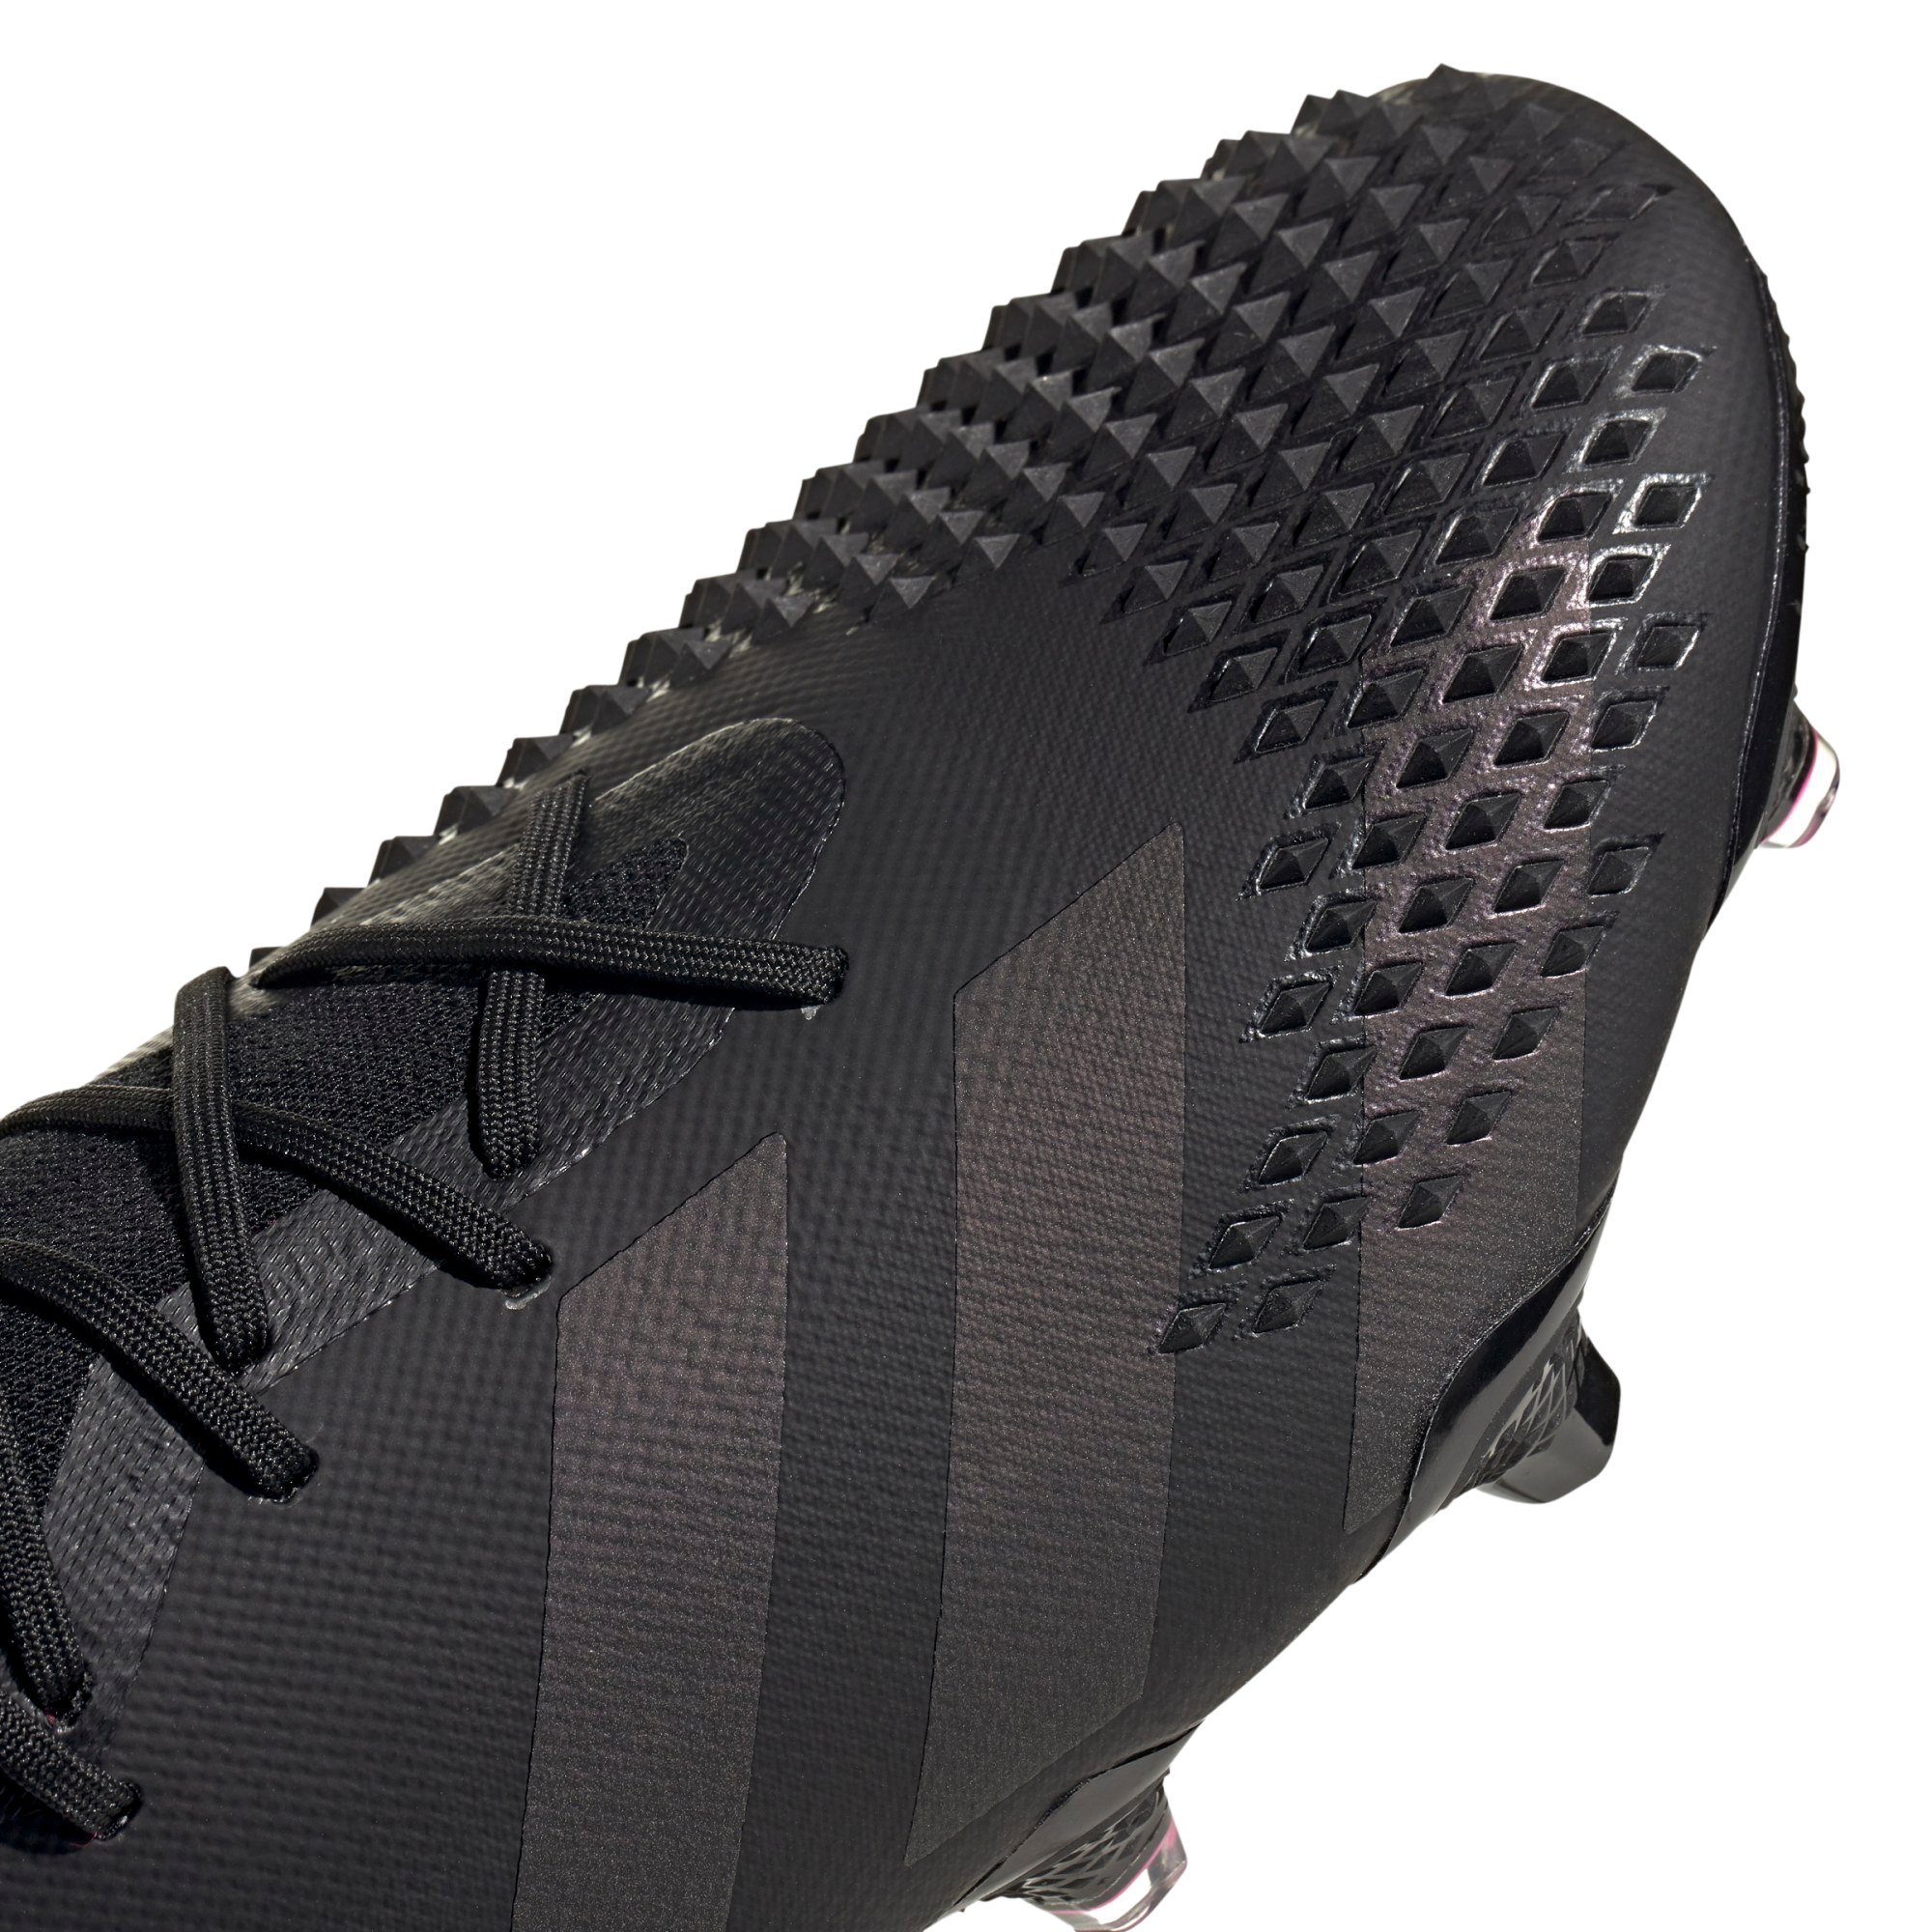 Adidas Predator 20.1 FG-CORE BLACK/SHOCK PINK